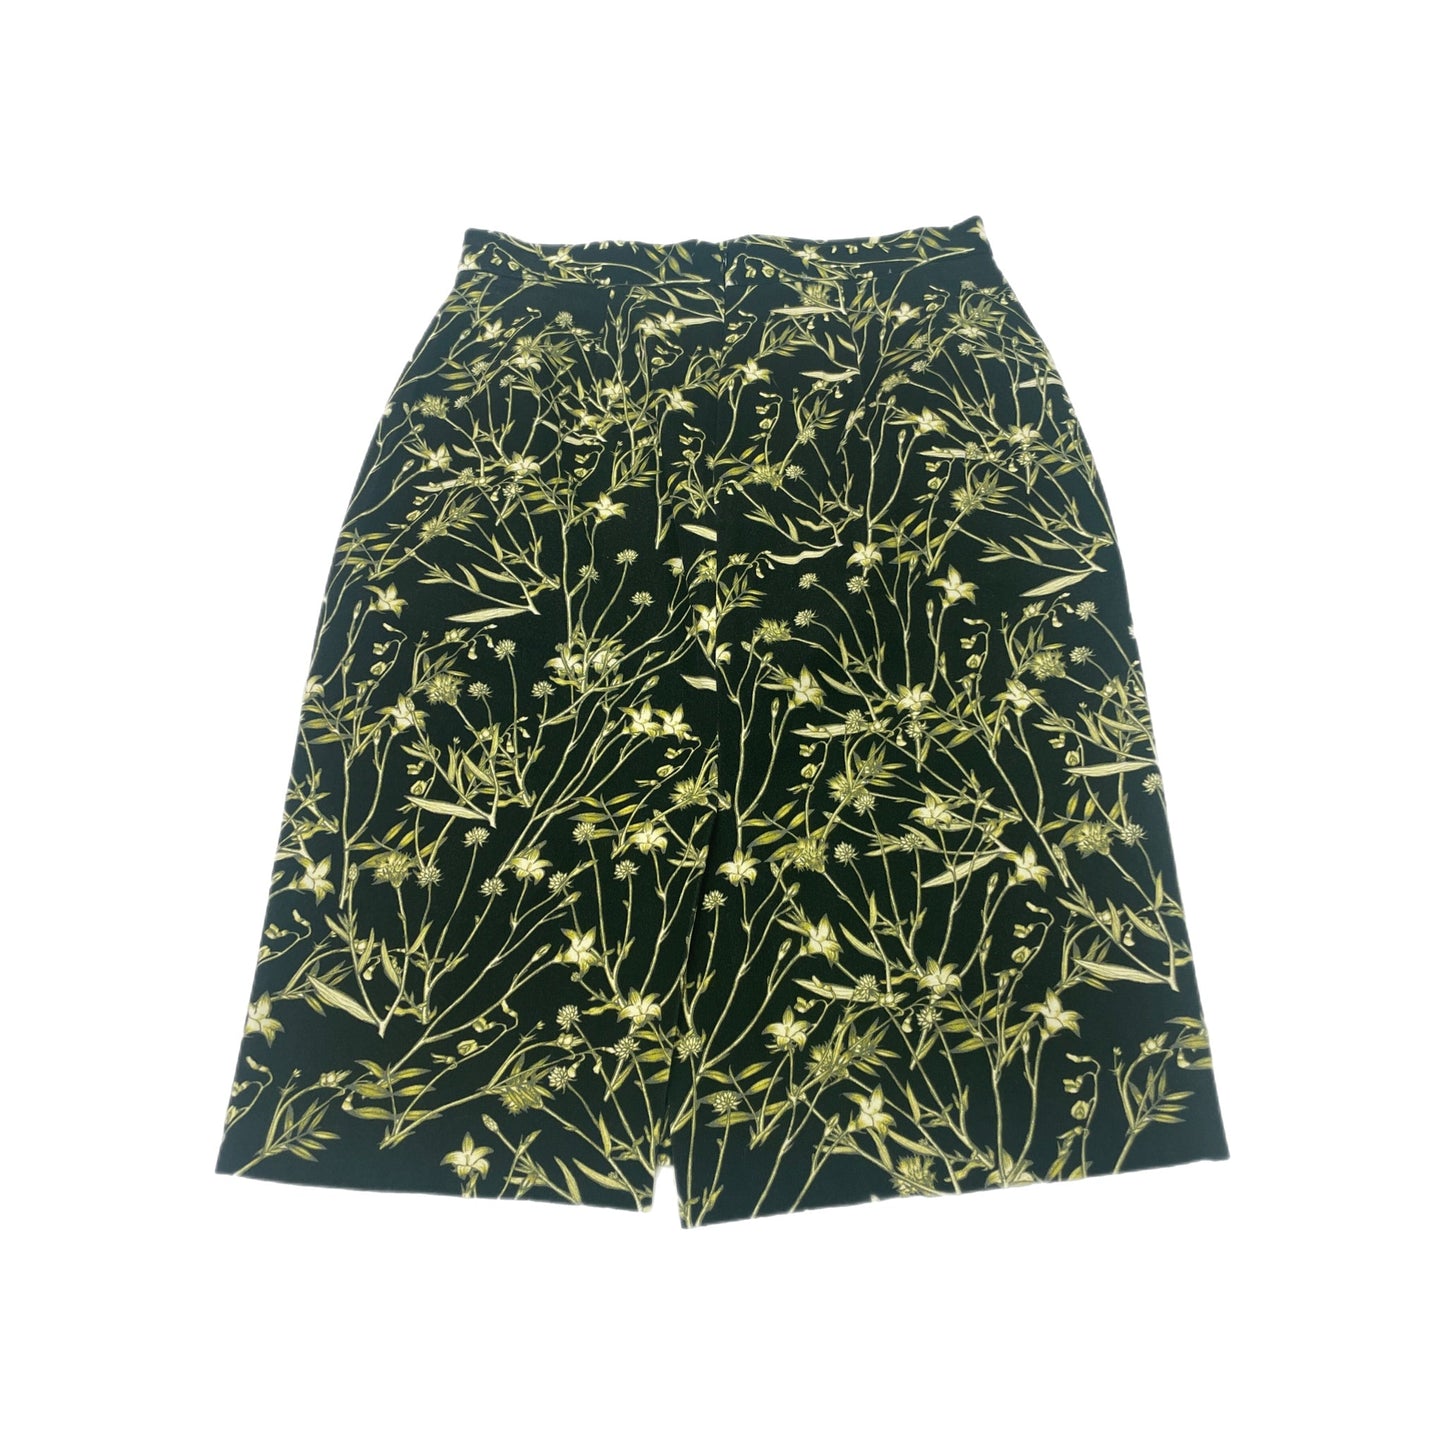 Skirt Mini & Short By Banana Republic  Size: 4